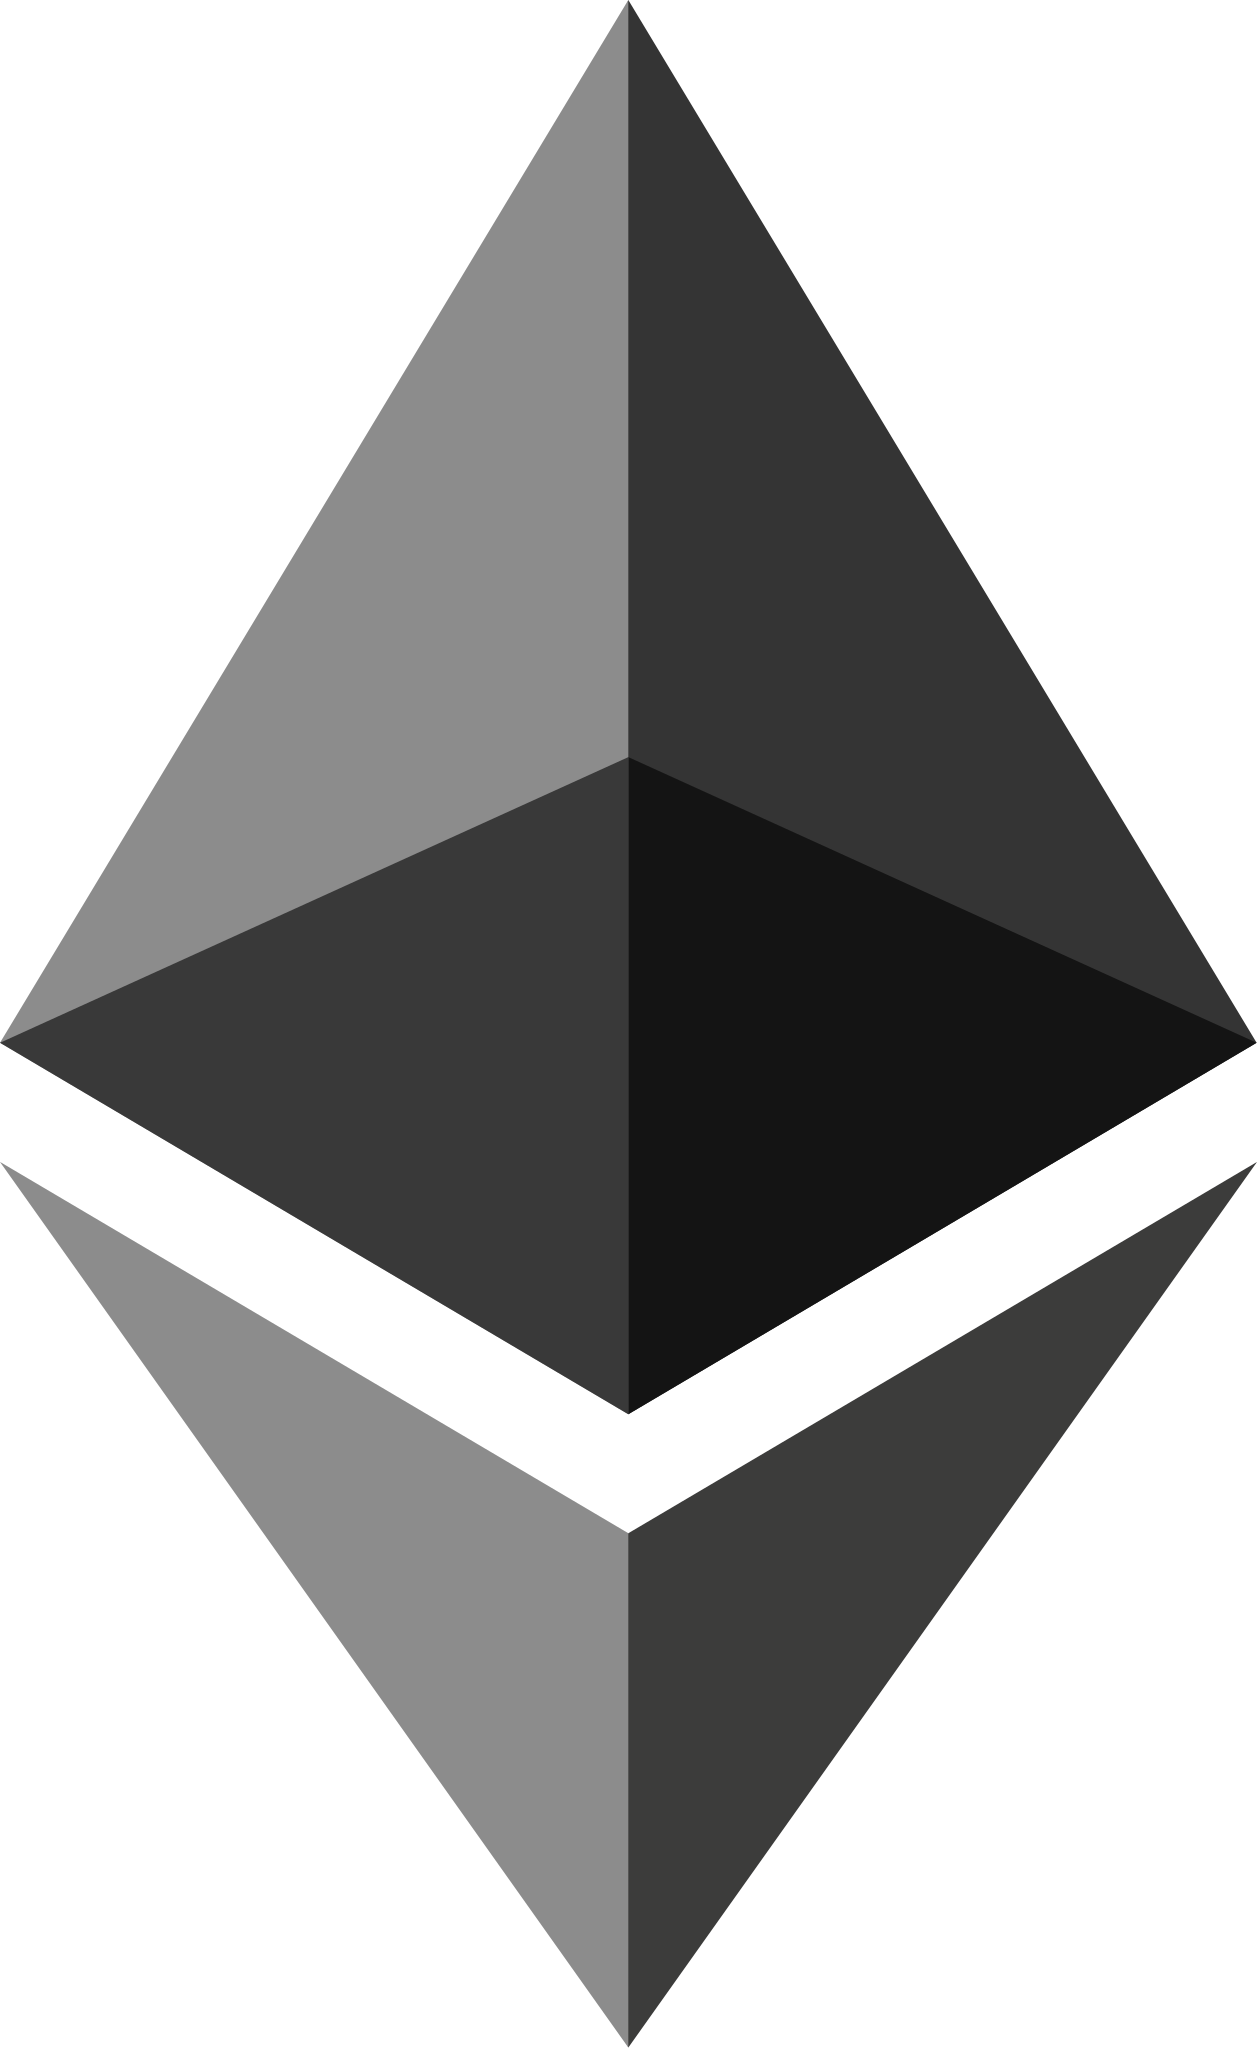 https://upload.wikimedia.org/wikipedia/commons/thumb/0/05/Ethereum_logo_2014.svg/1257px-Ethereum_logo_2014.svg.png